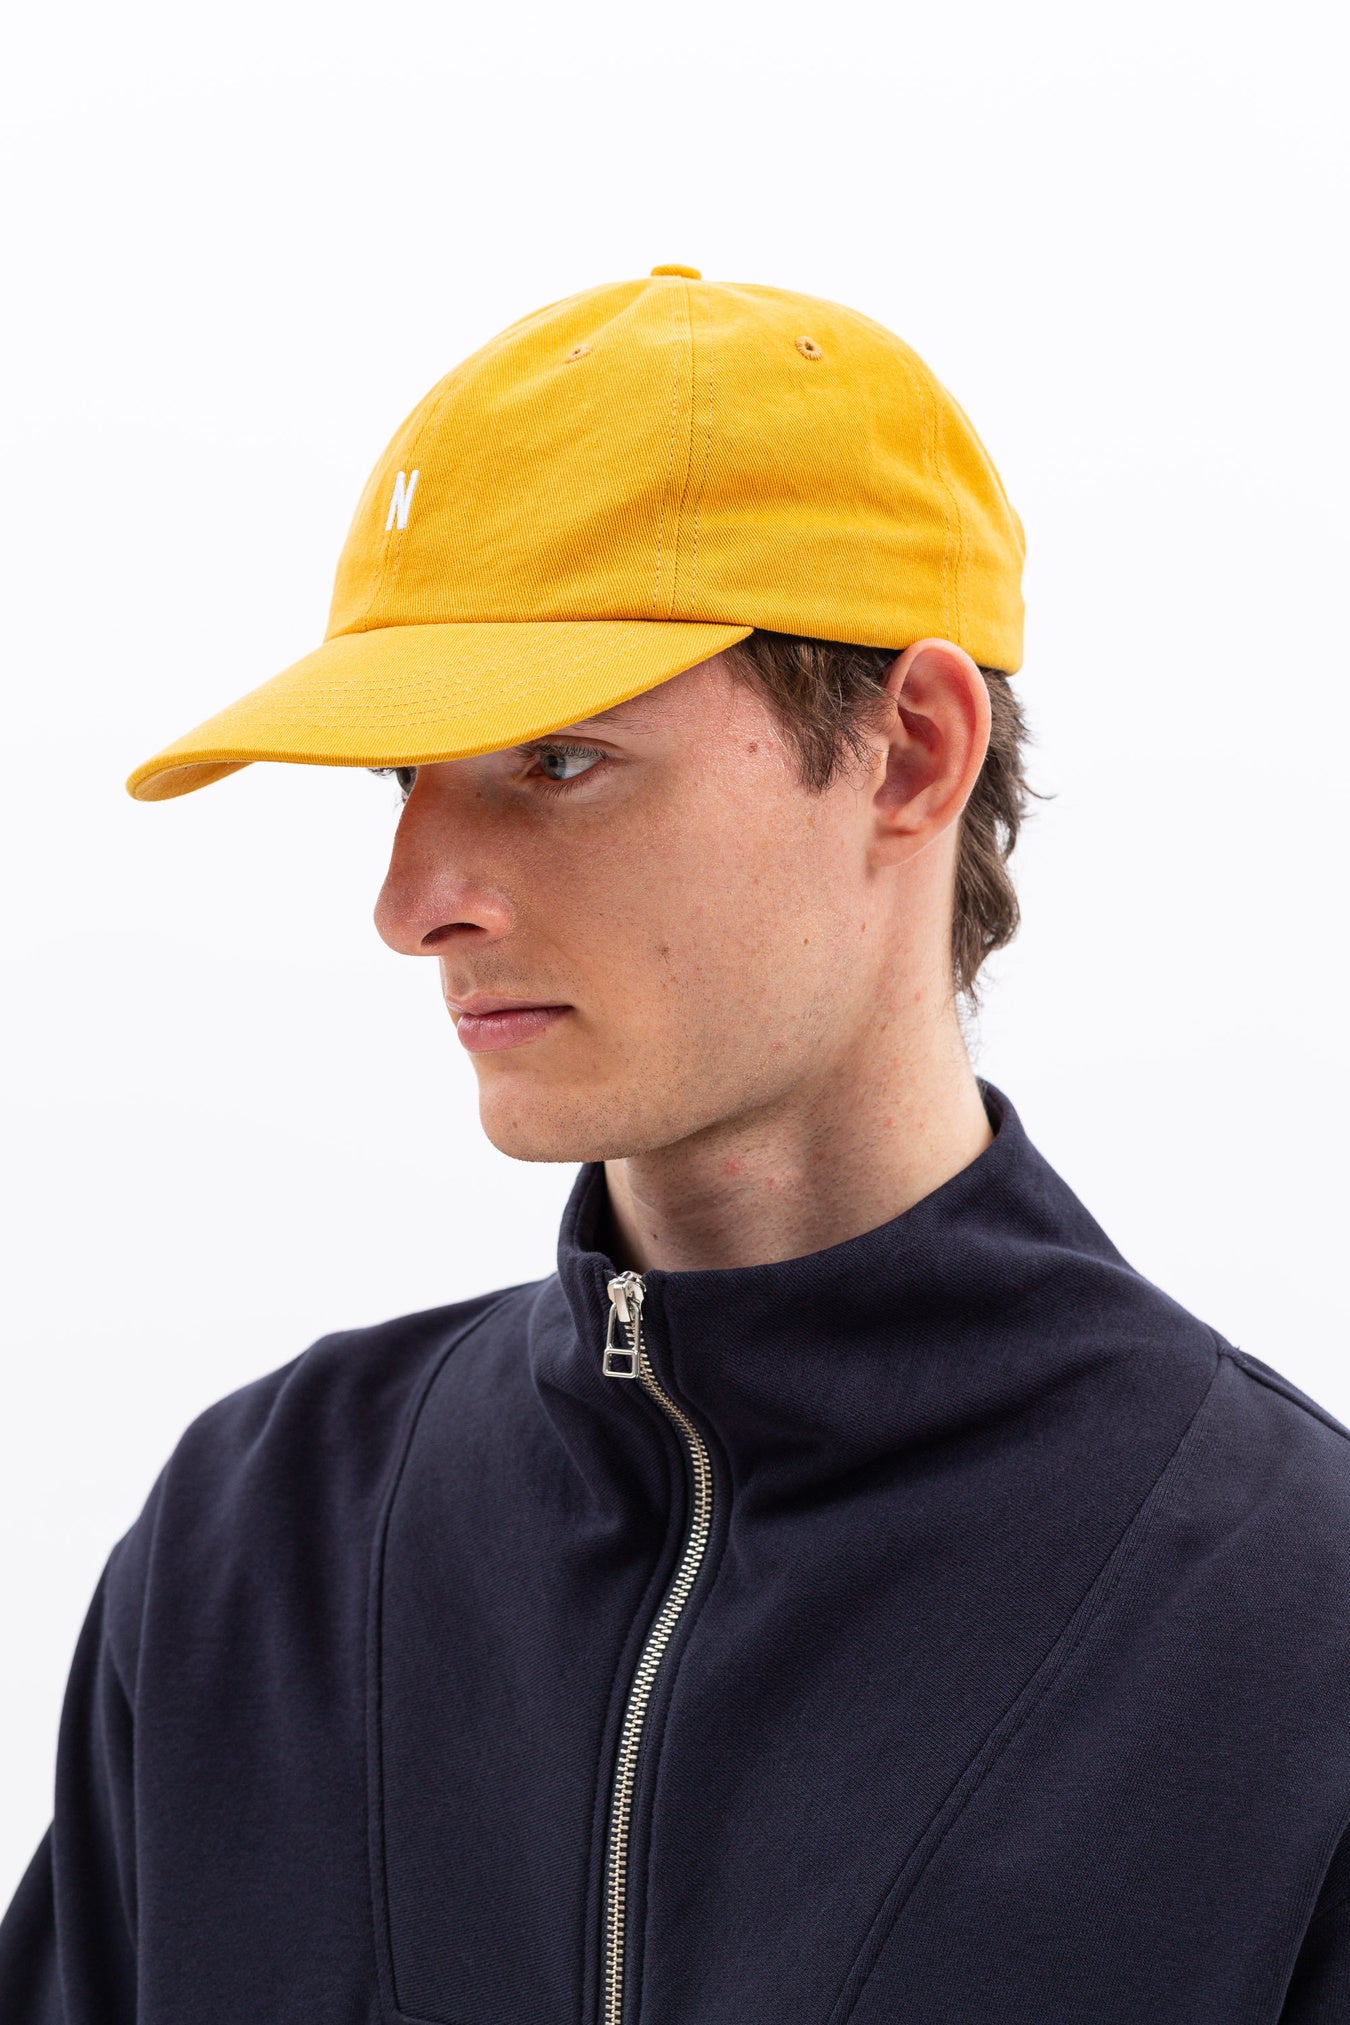 Twill Sports Cap - Chrome Yellow